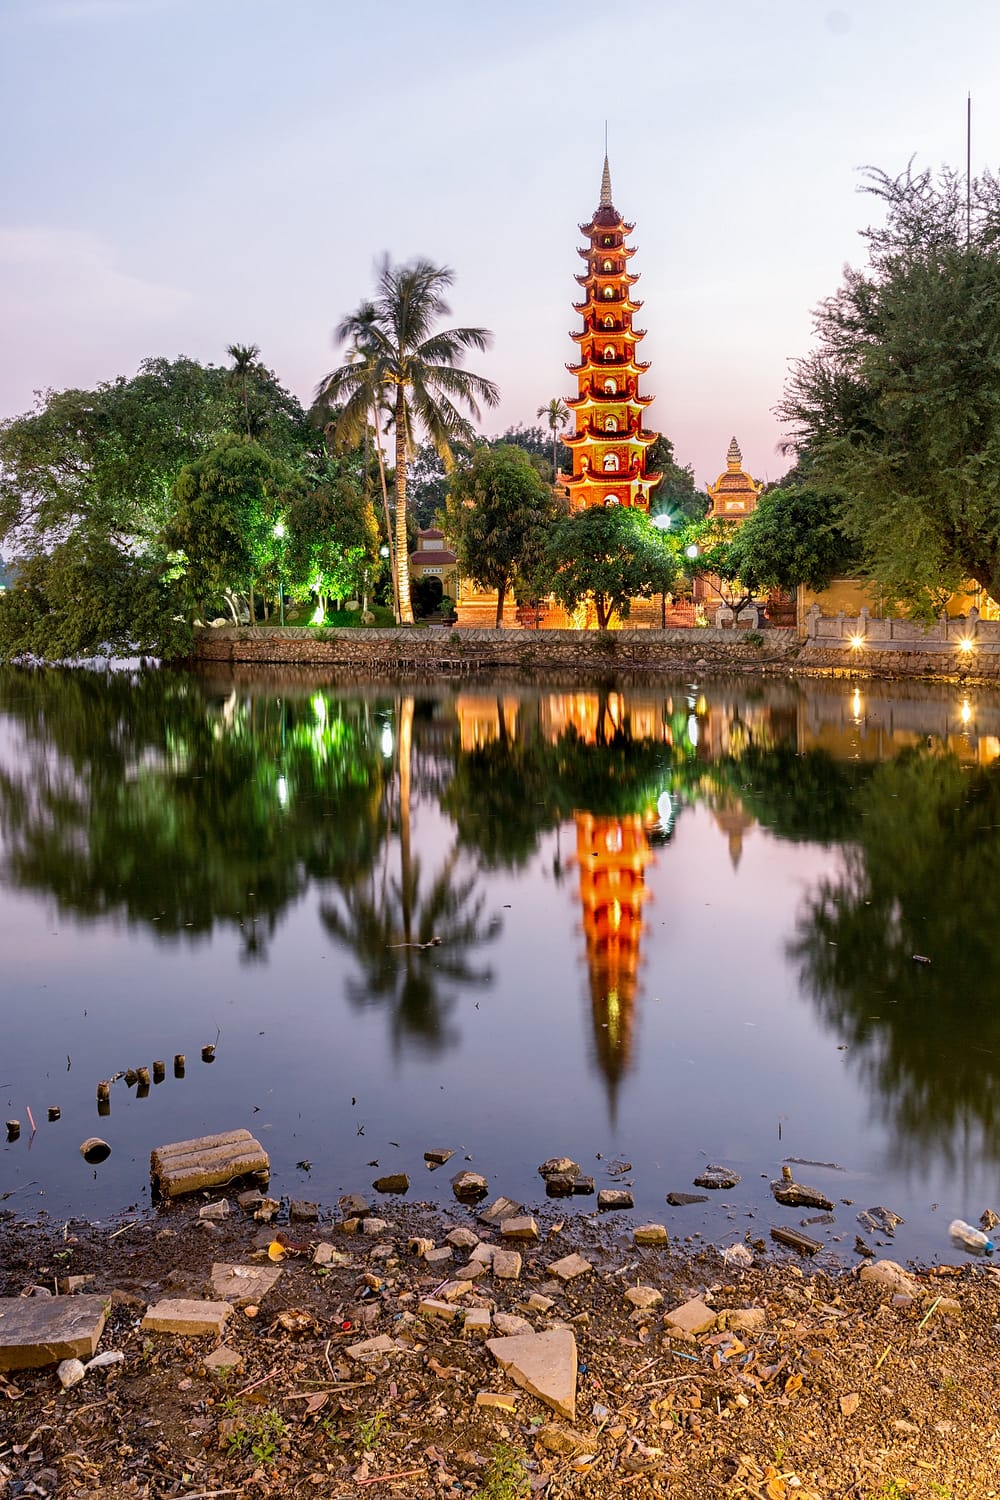 Tran Quoc Pagoda Twilight - West Lake - Hanoi, Vietnam